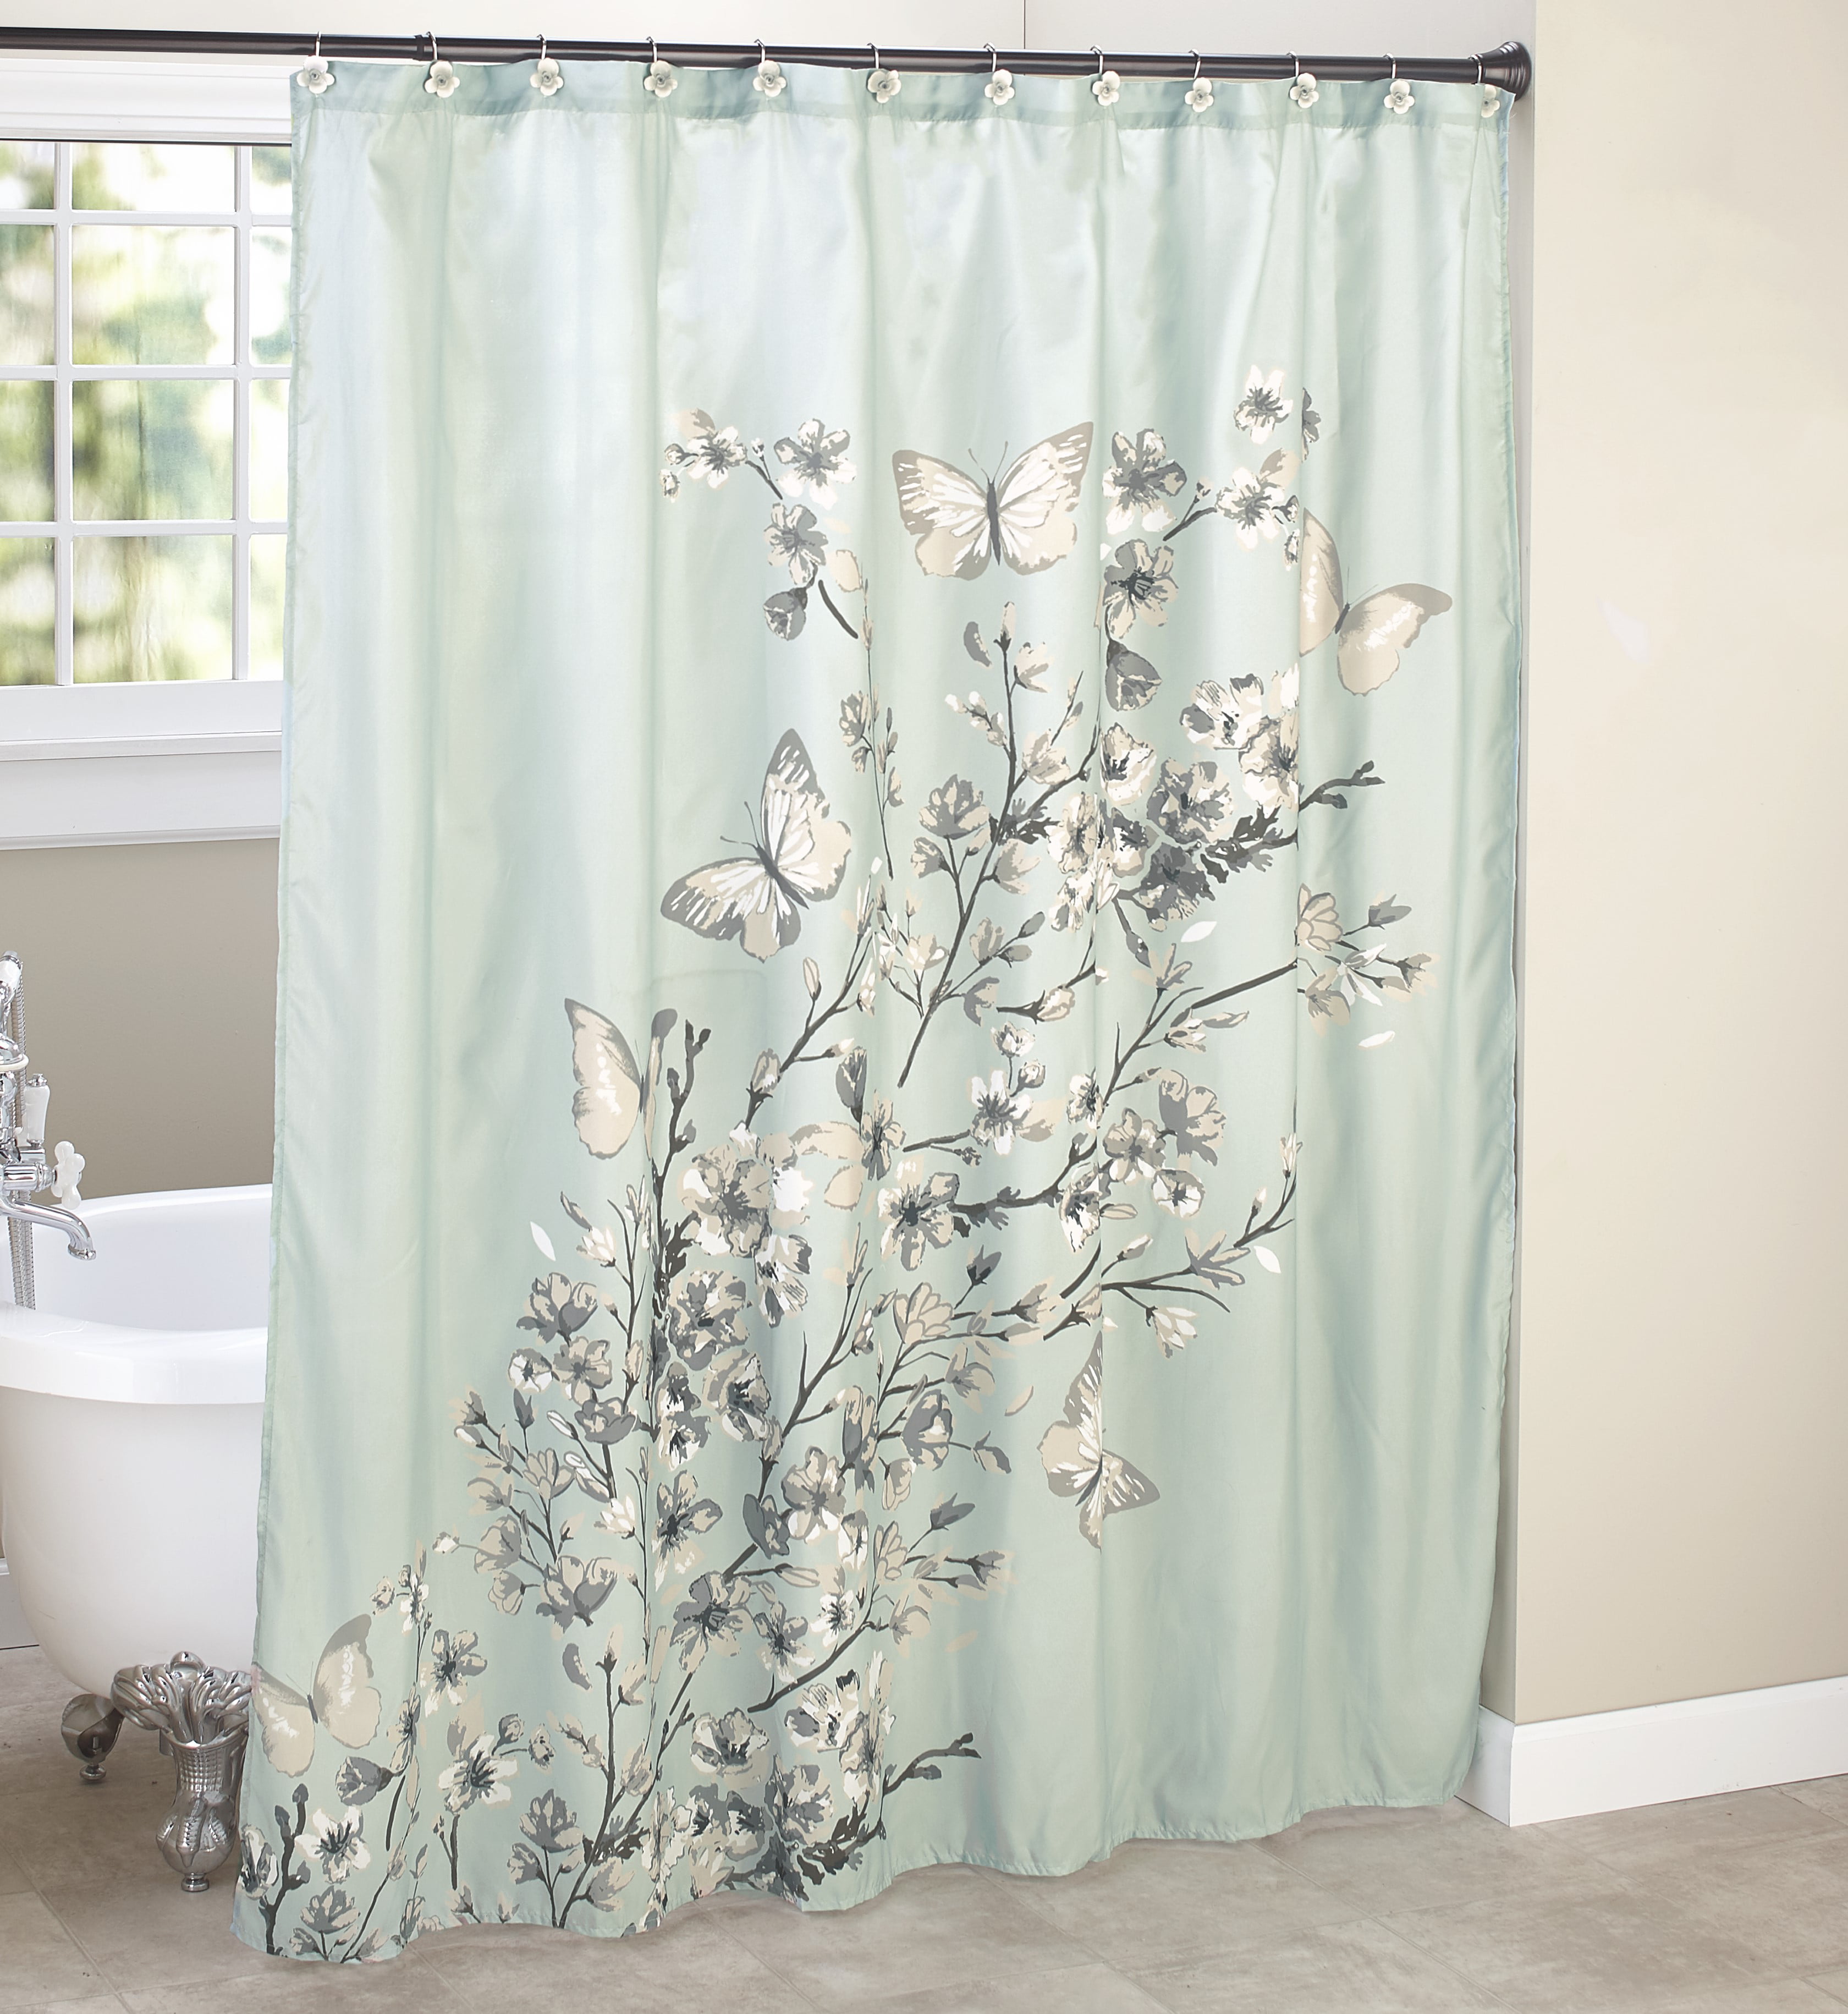 New Baseball and wood Bathroom Shower Curtain Waterproof Fabric 12 Hooks 71*71in 